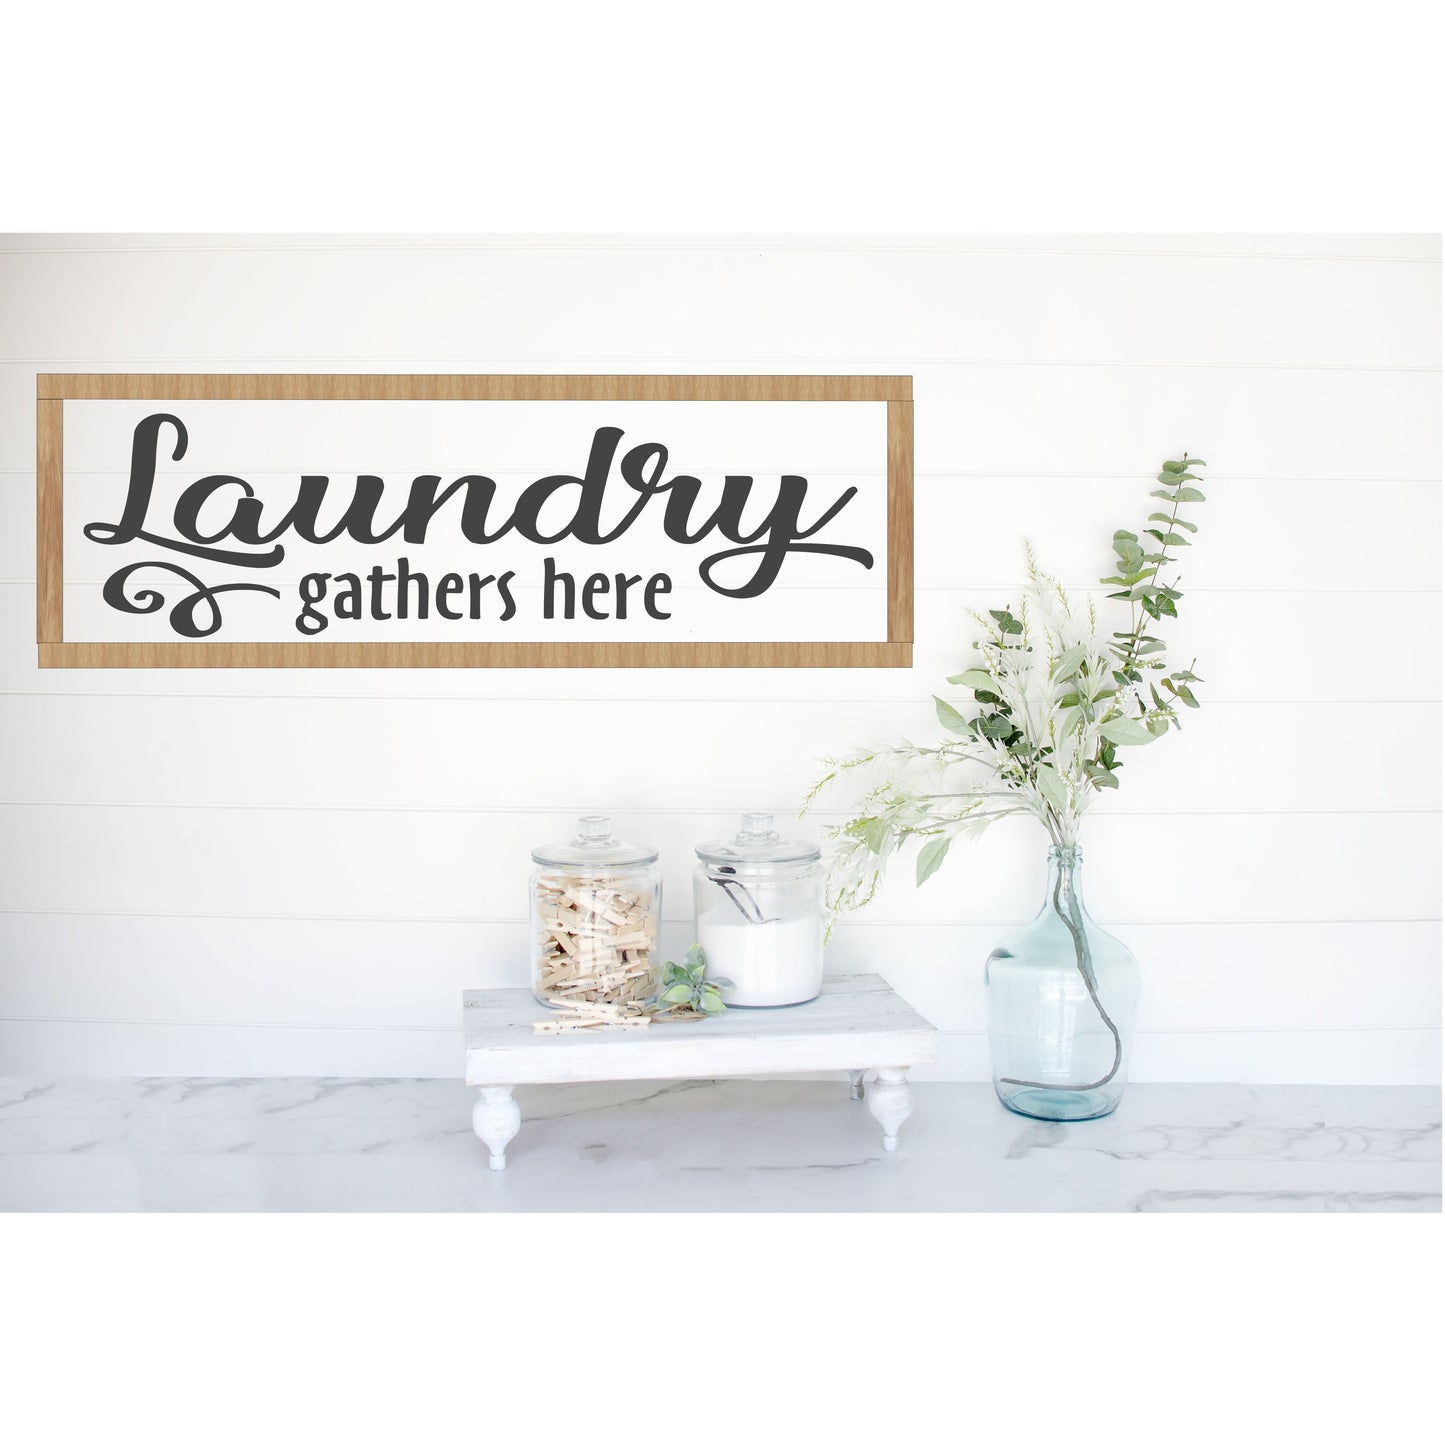 Funny Bathroom & Laundry Framed Gallery signs